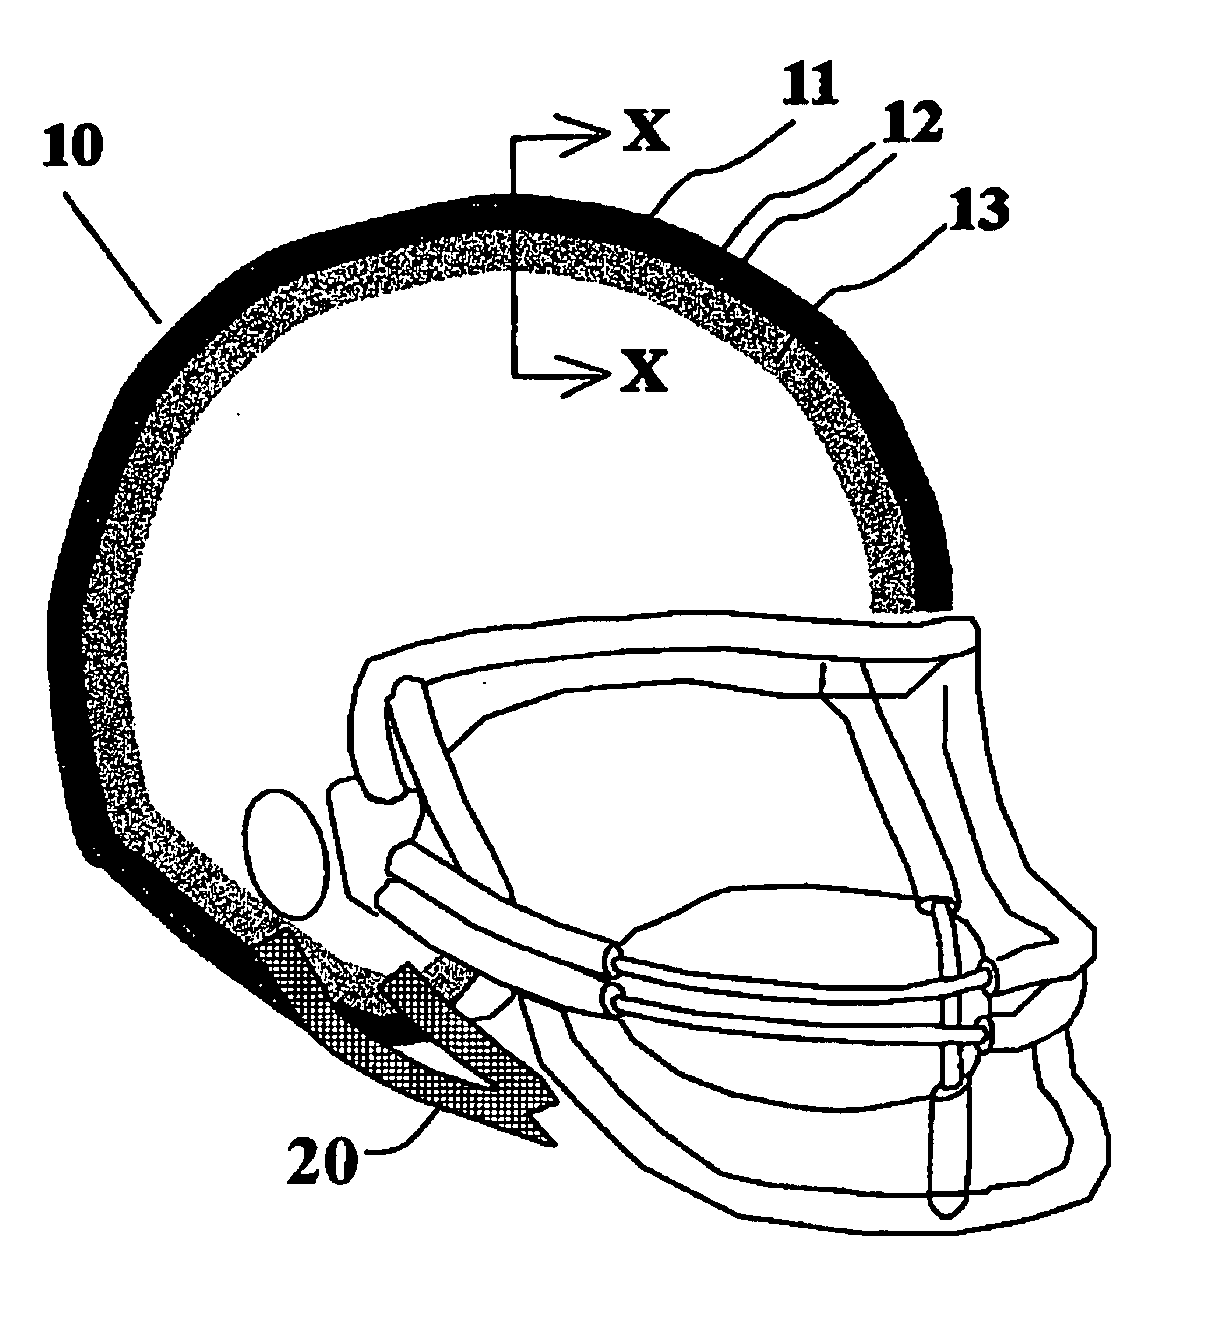 Lightweight impact resistant helmet system